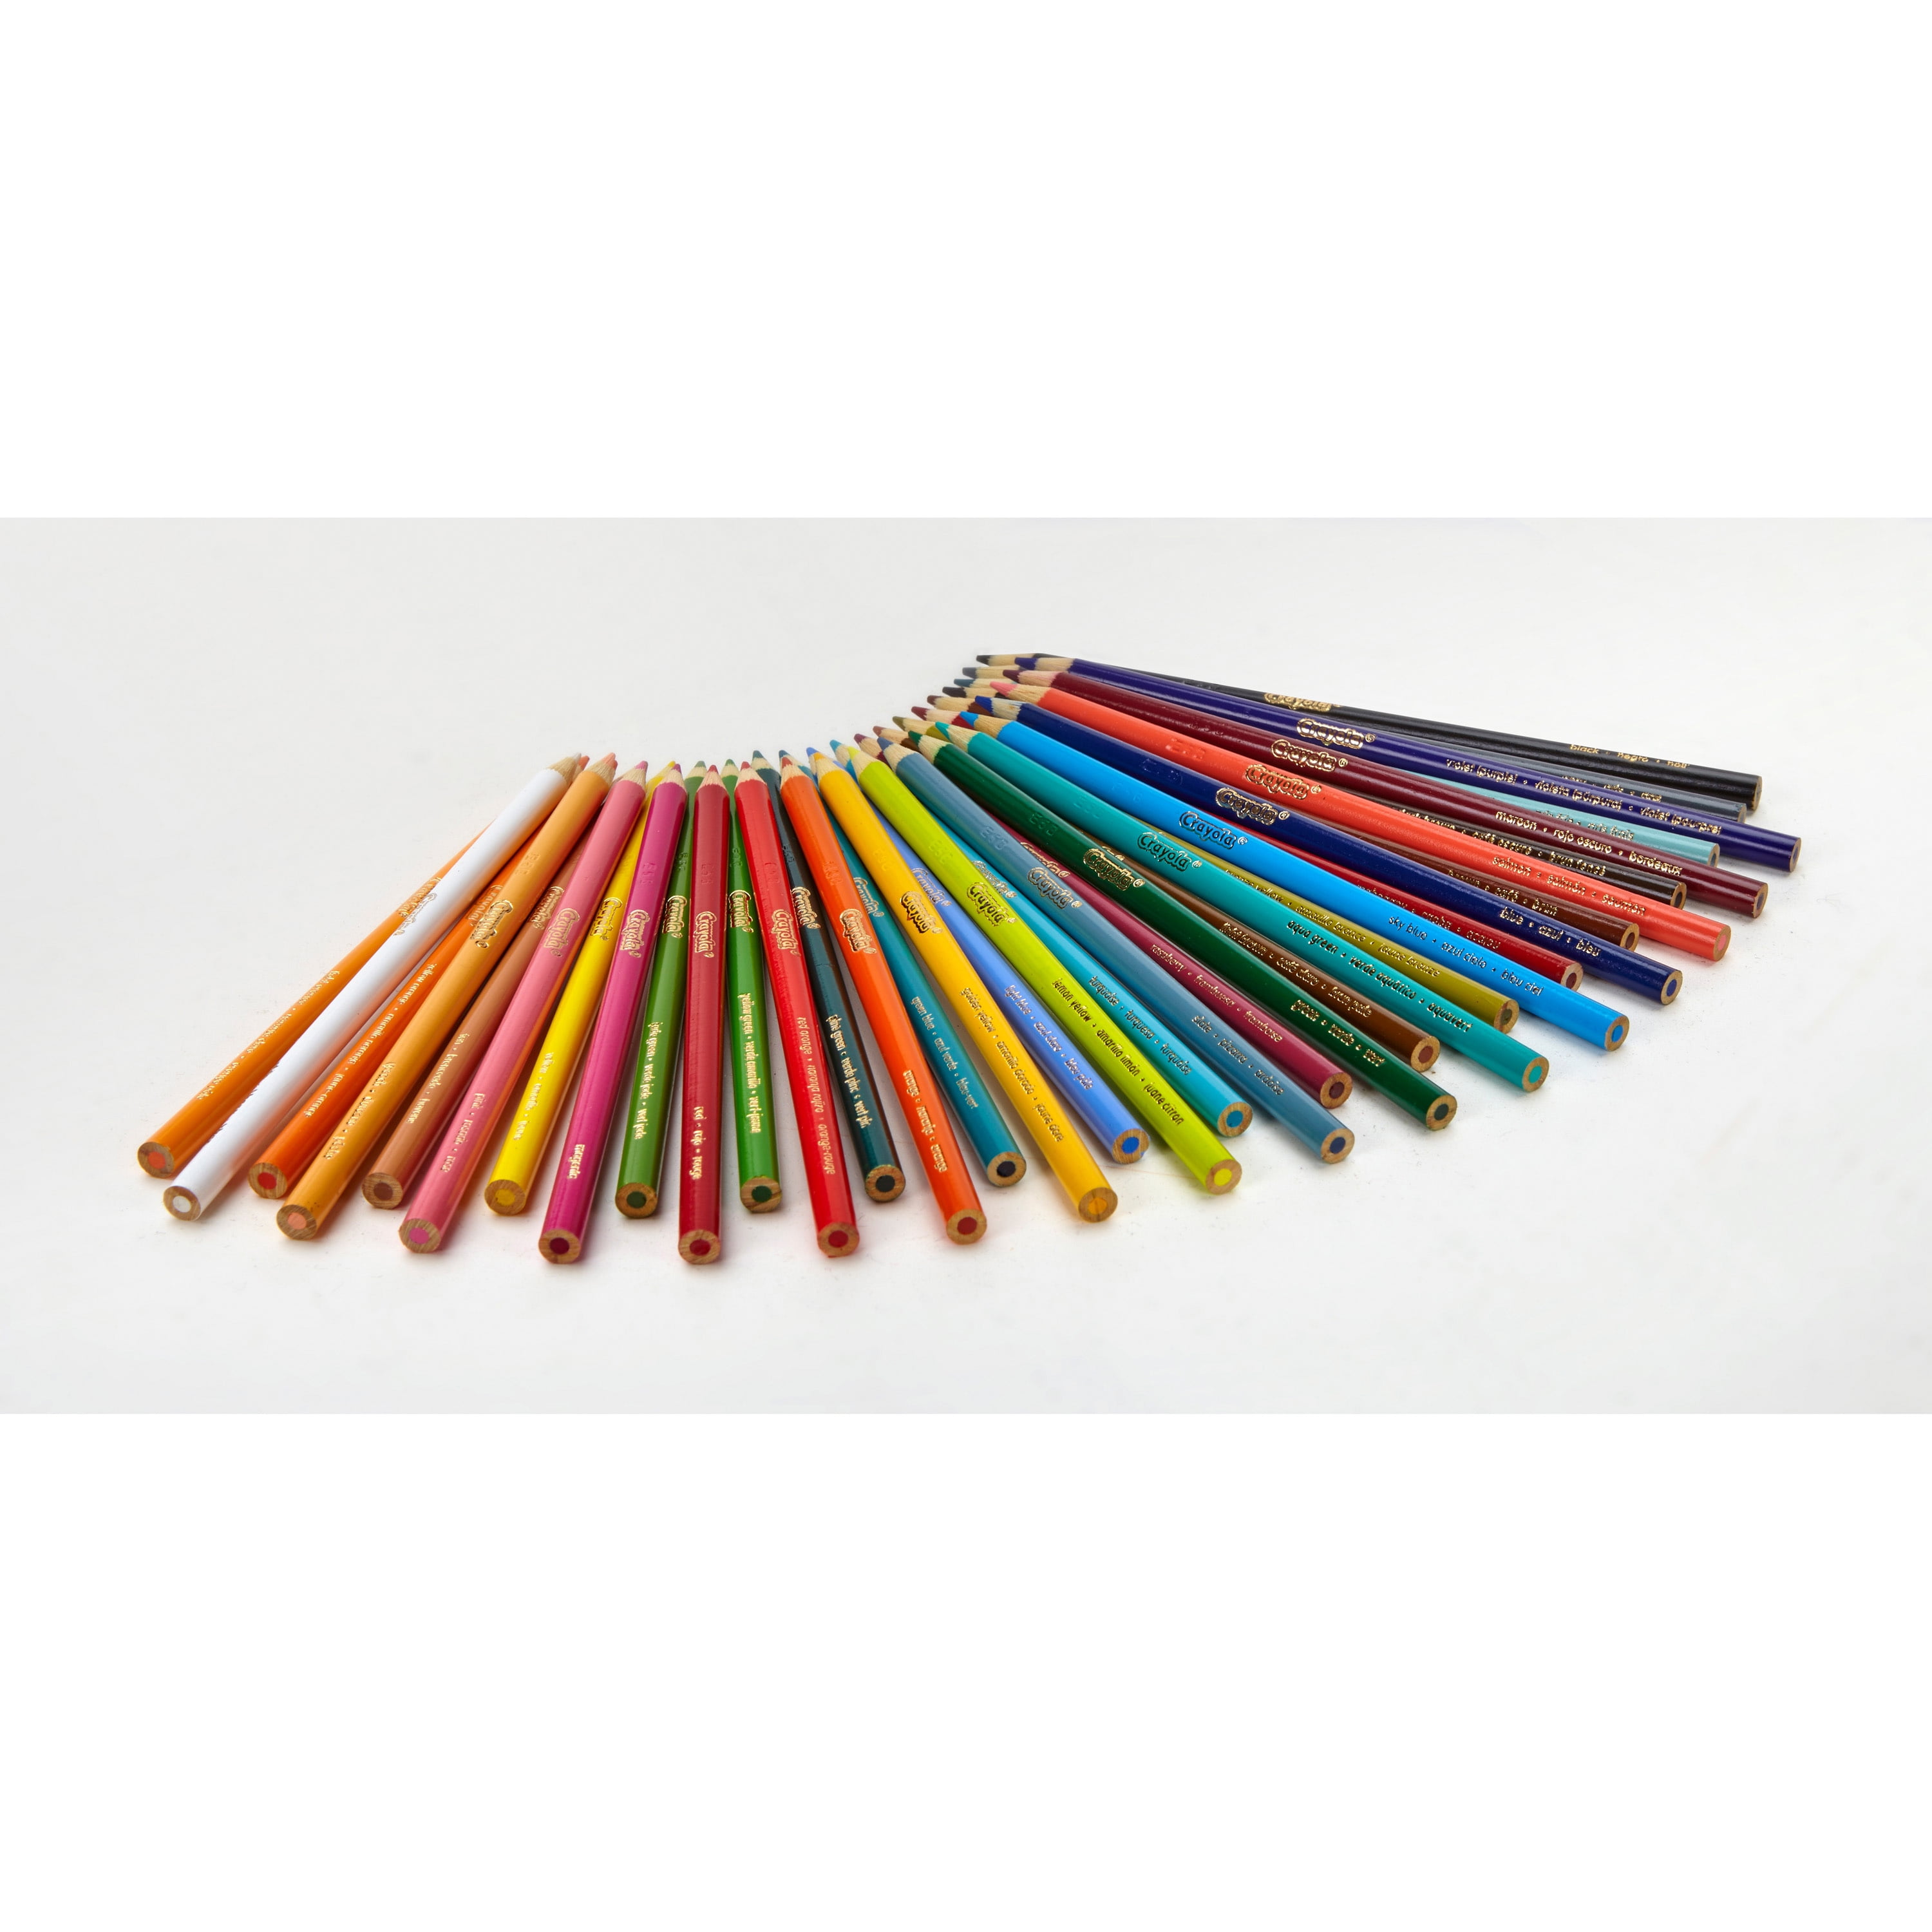 JOYIN 3 Pack (108 Count) 36 color Colored Pencil Set, Pre